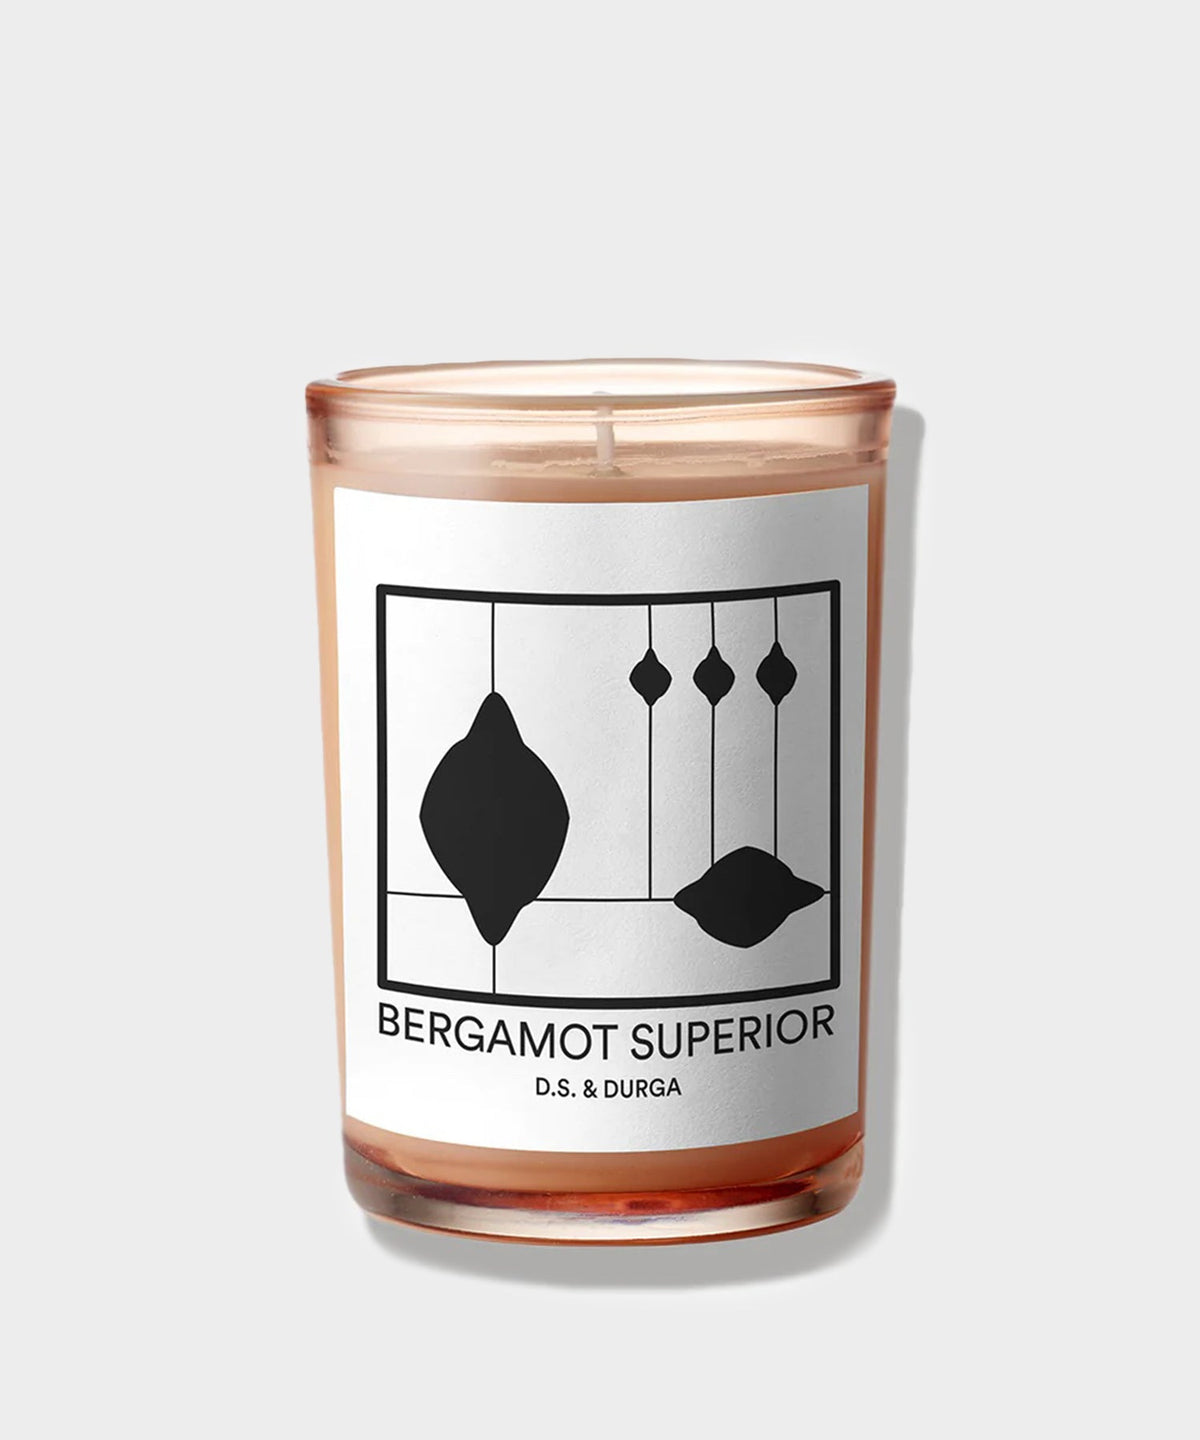 D.S. & DURGA Bergamot Superior Candle 7oz